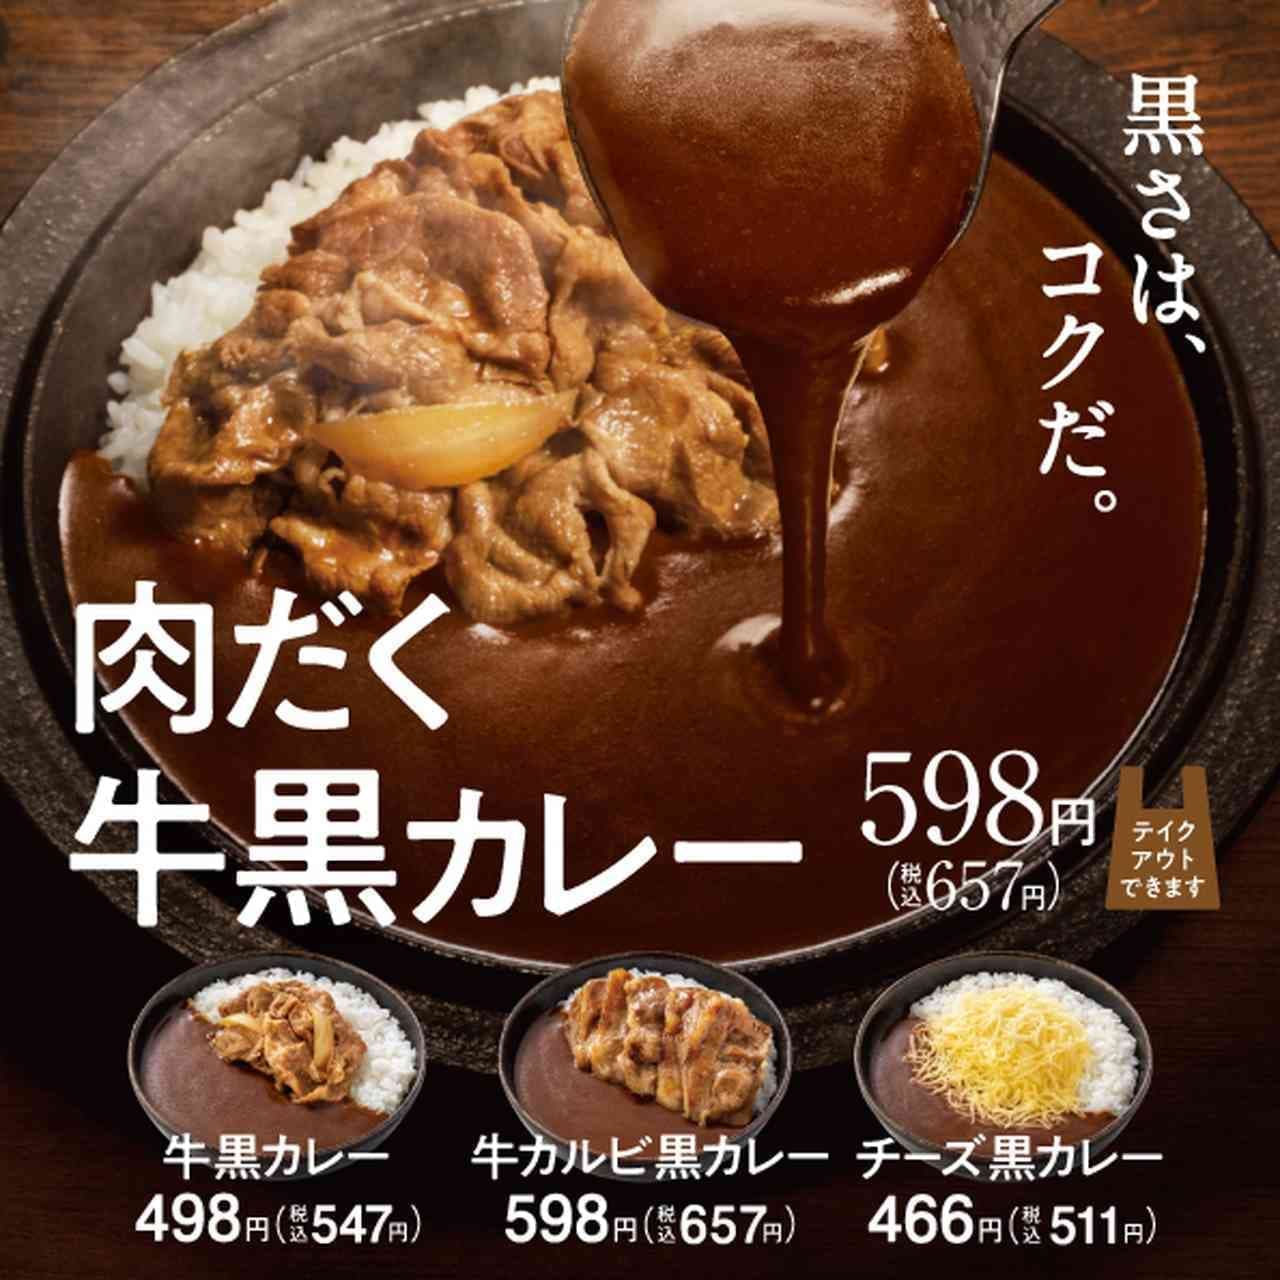 Yoshinoya "Beef Black Curry with Lots of Meat